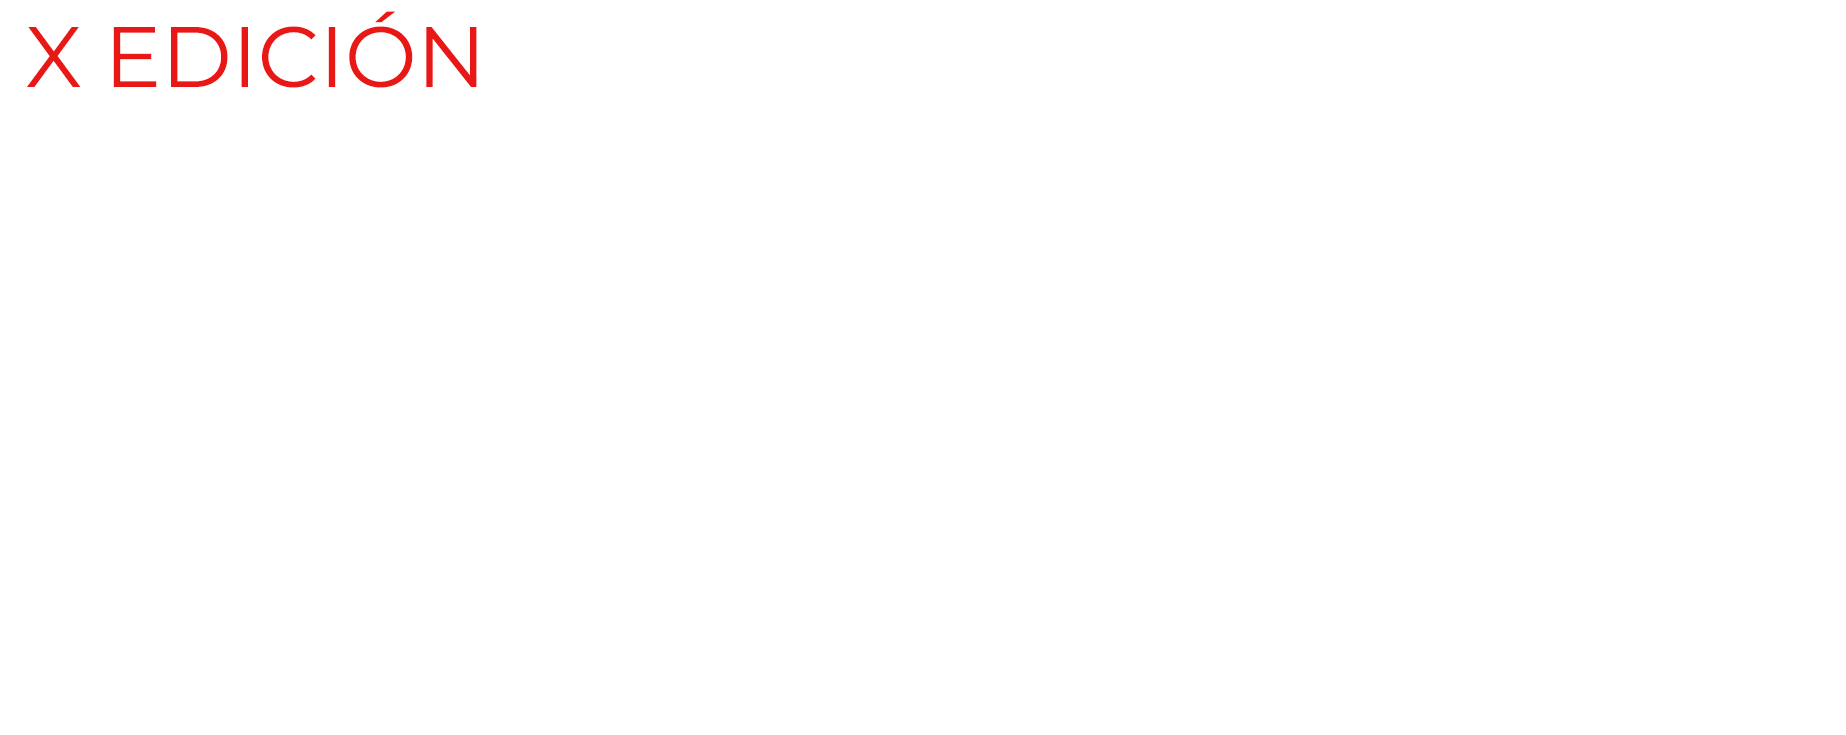 bioinvestorprogram_X EDICION